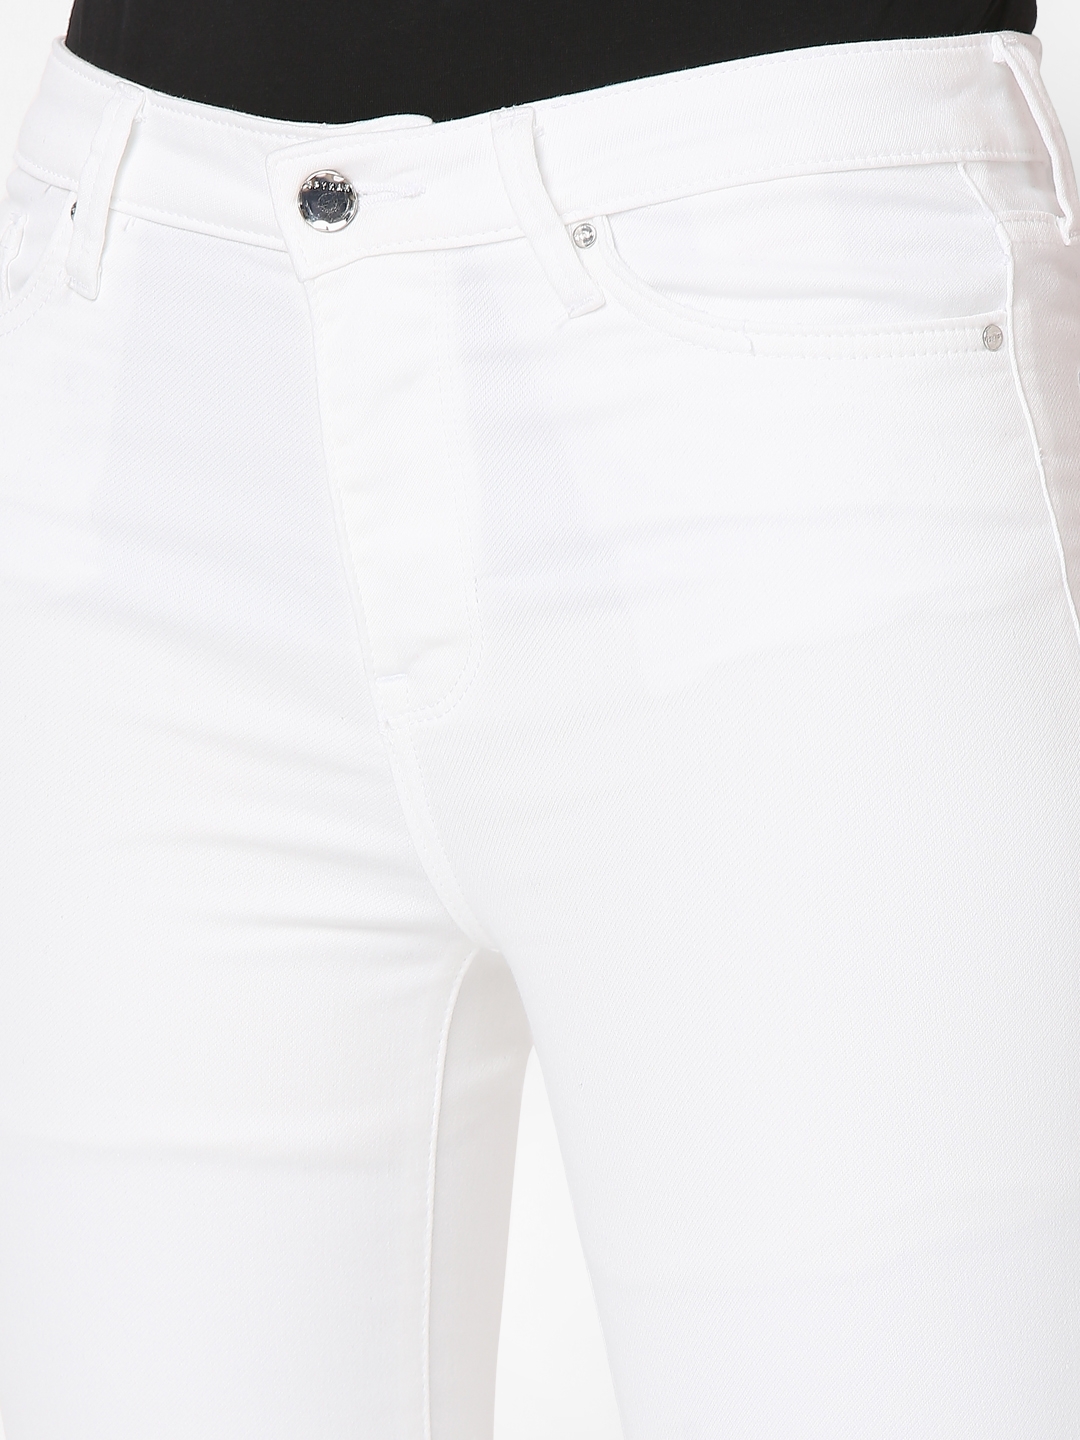 spykar | Women's White Cotton Solid Slim Jeans 5